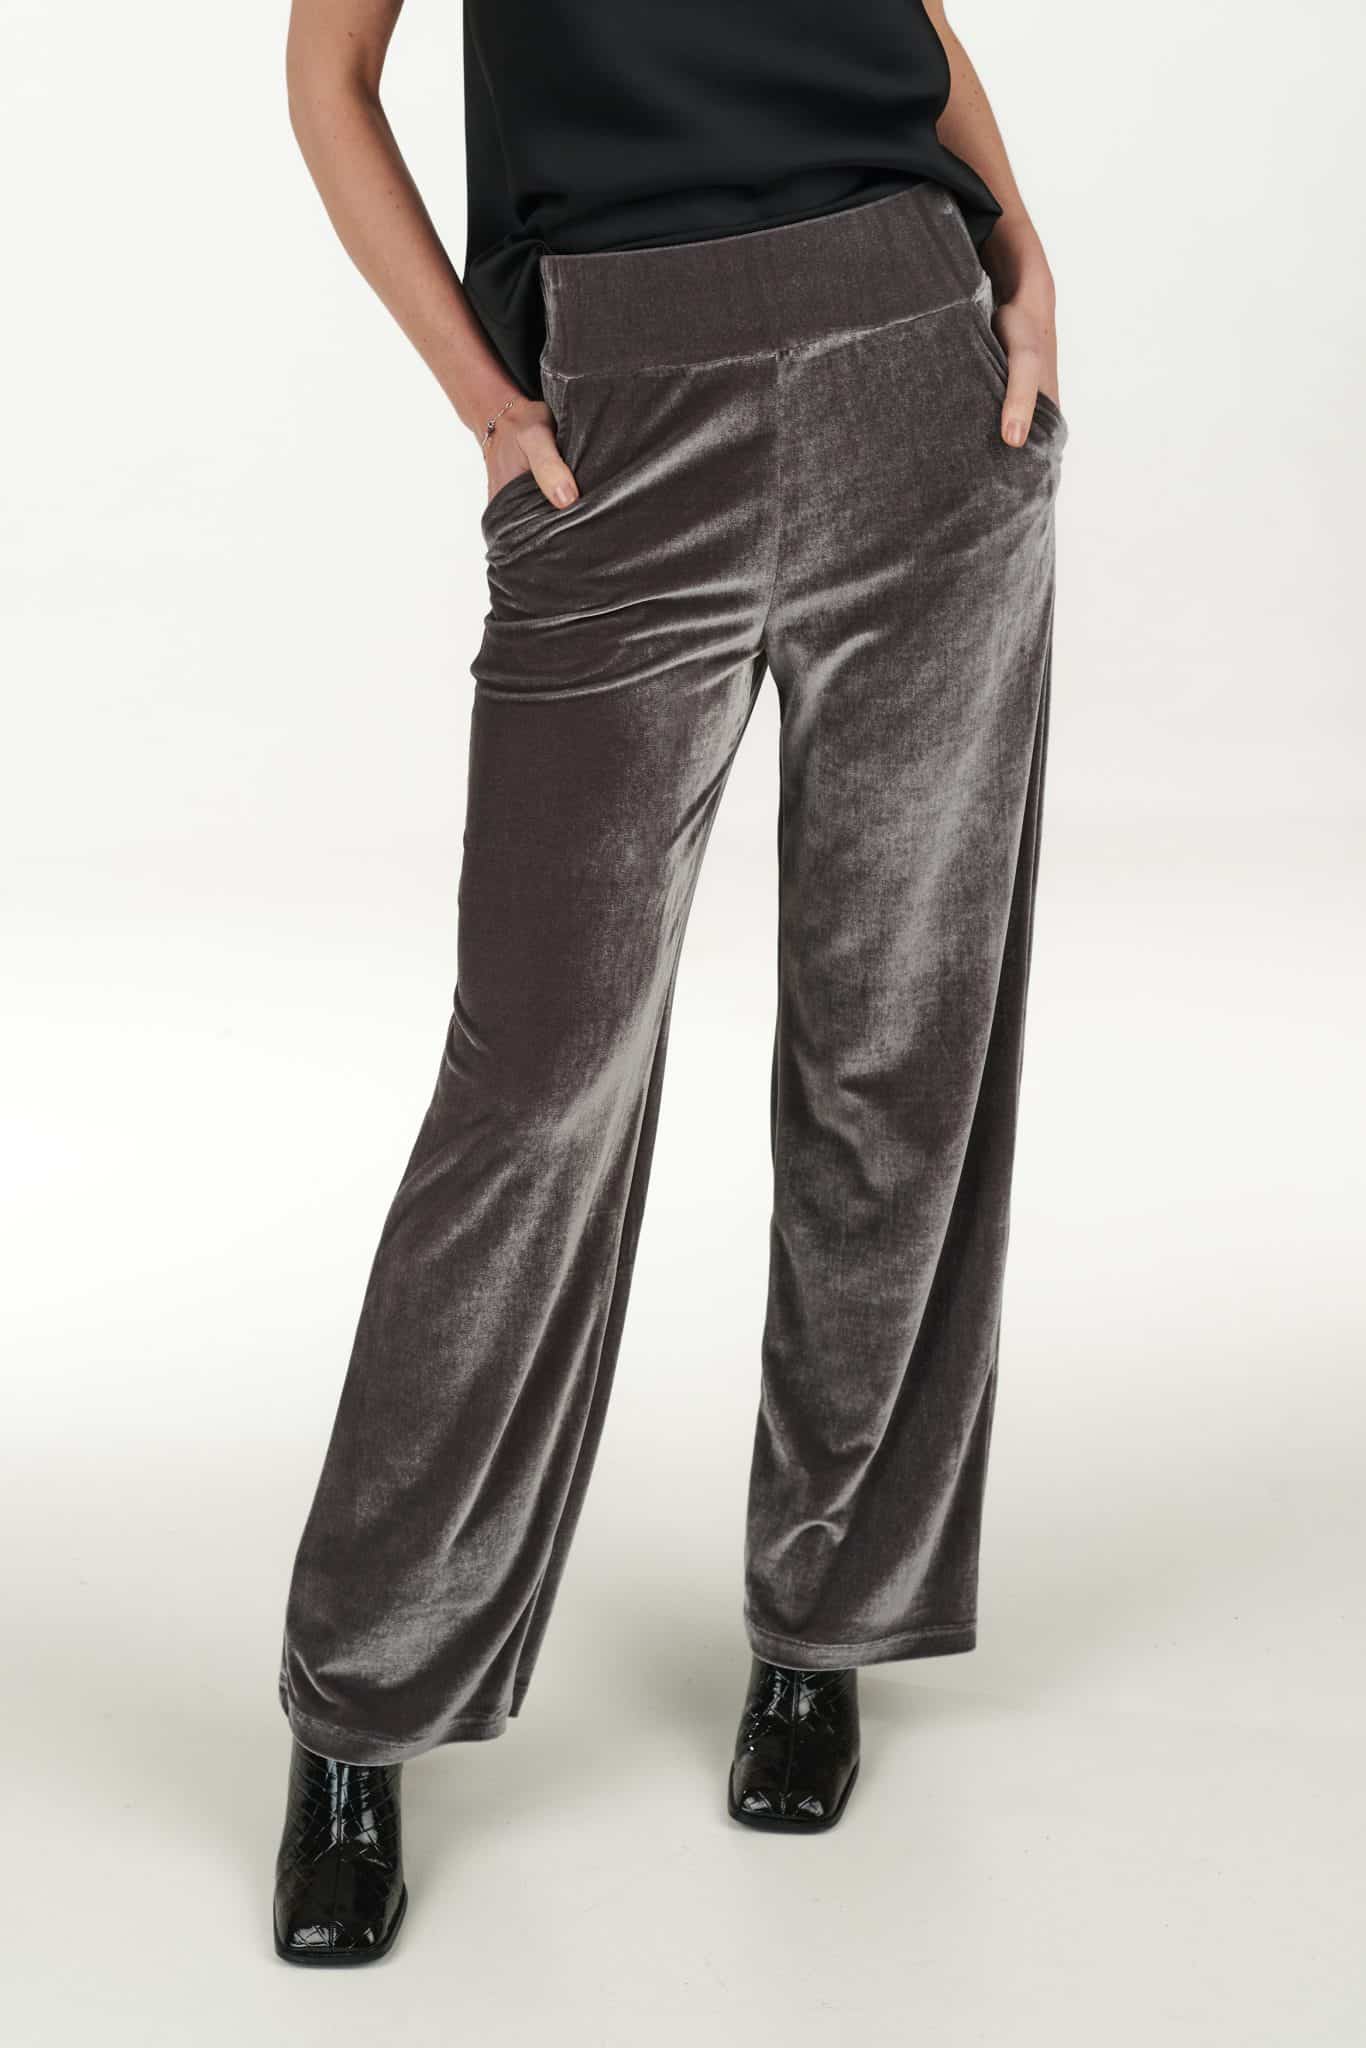 Shine Away Trousers in Silver Grey Velvet by UMU